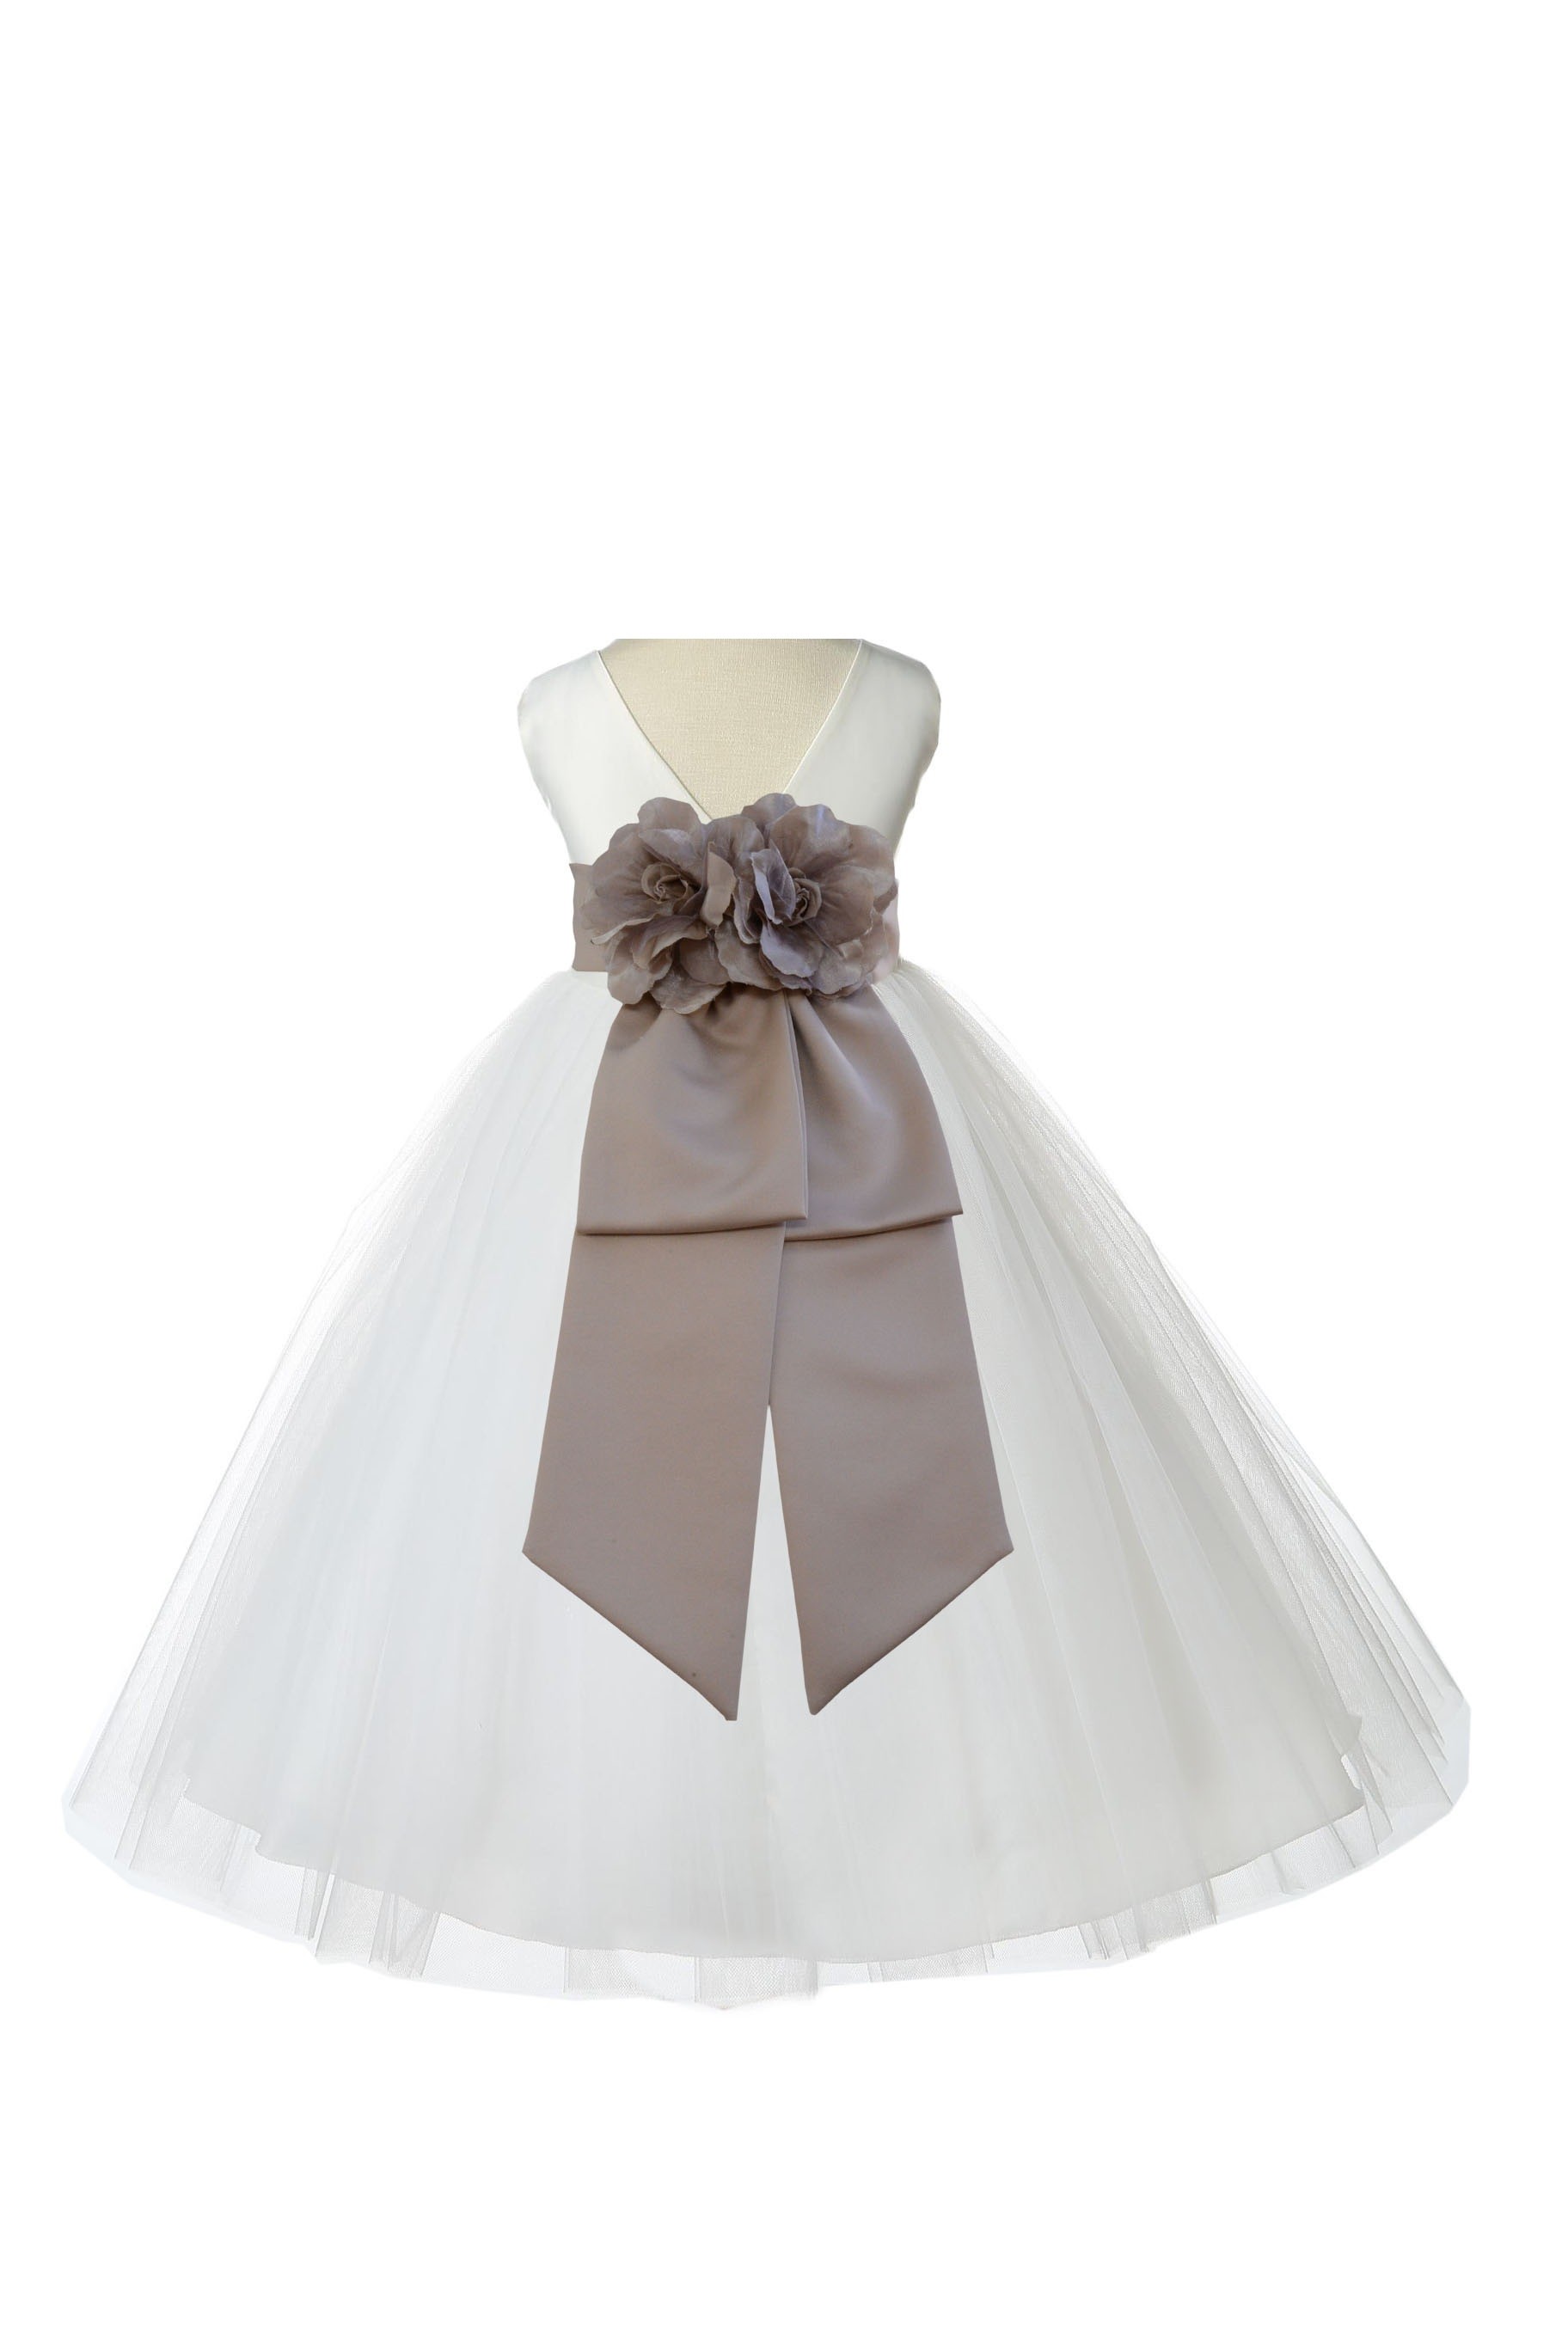 V-Neck Tulle Ivory/Champagne Flower Girl Dress Wedding Pageant 108